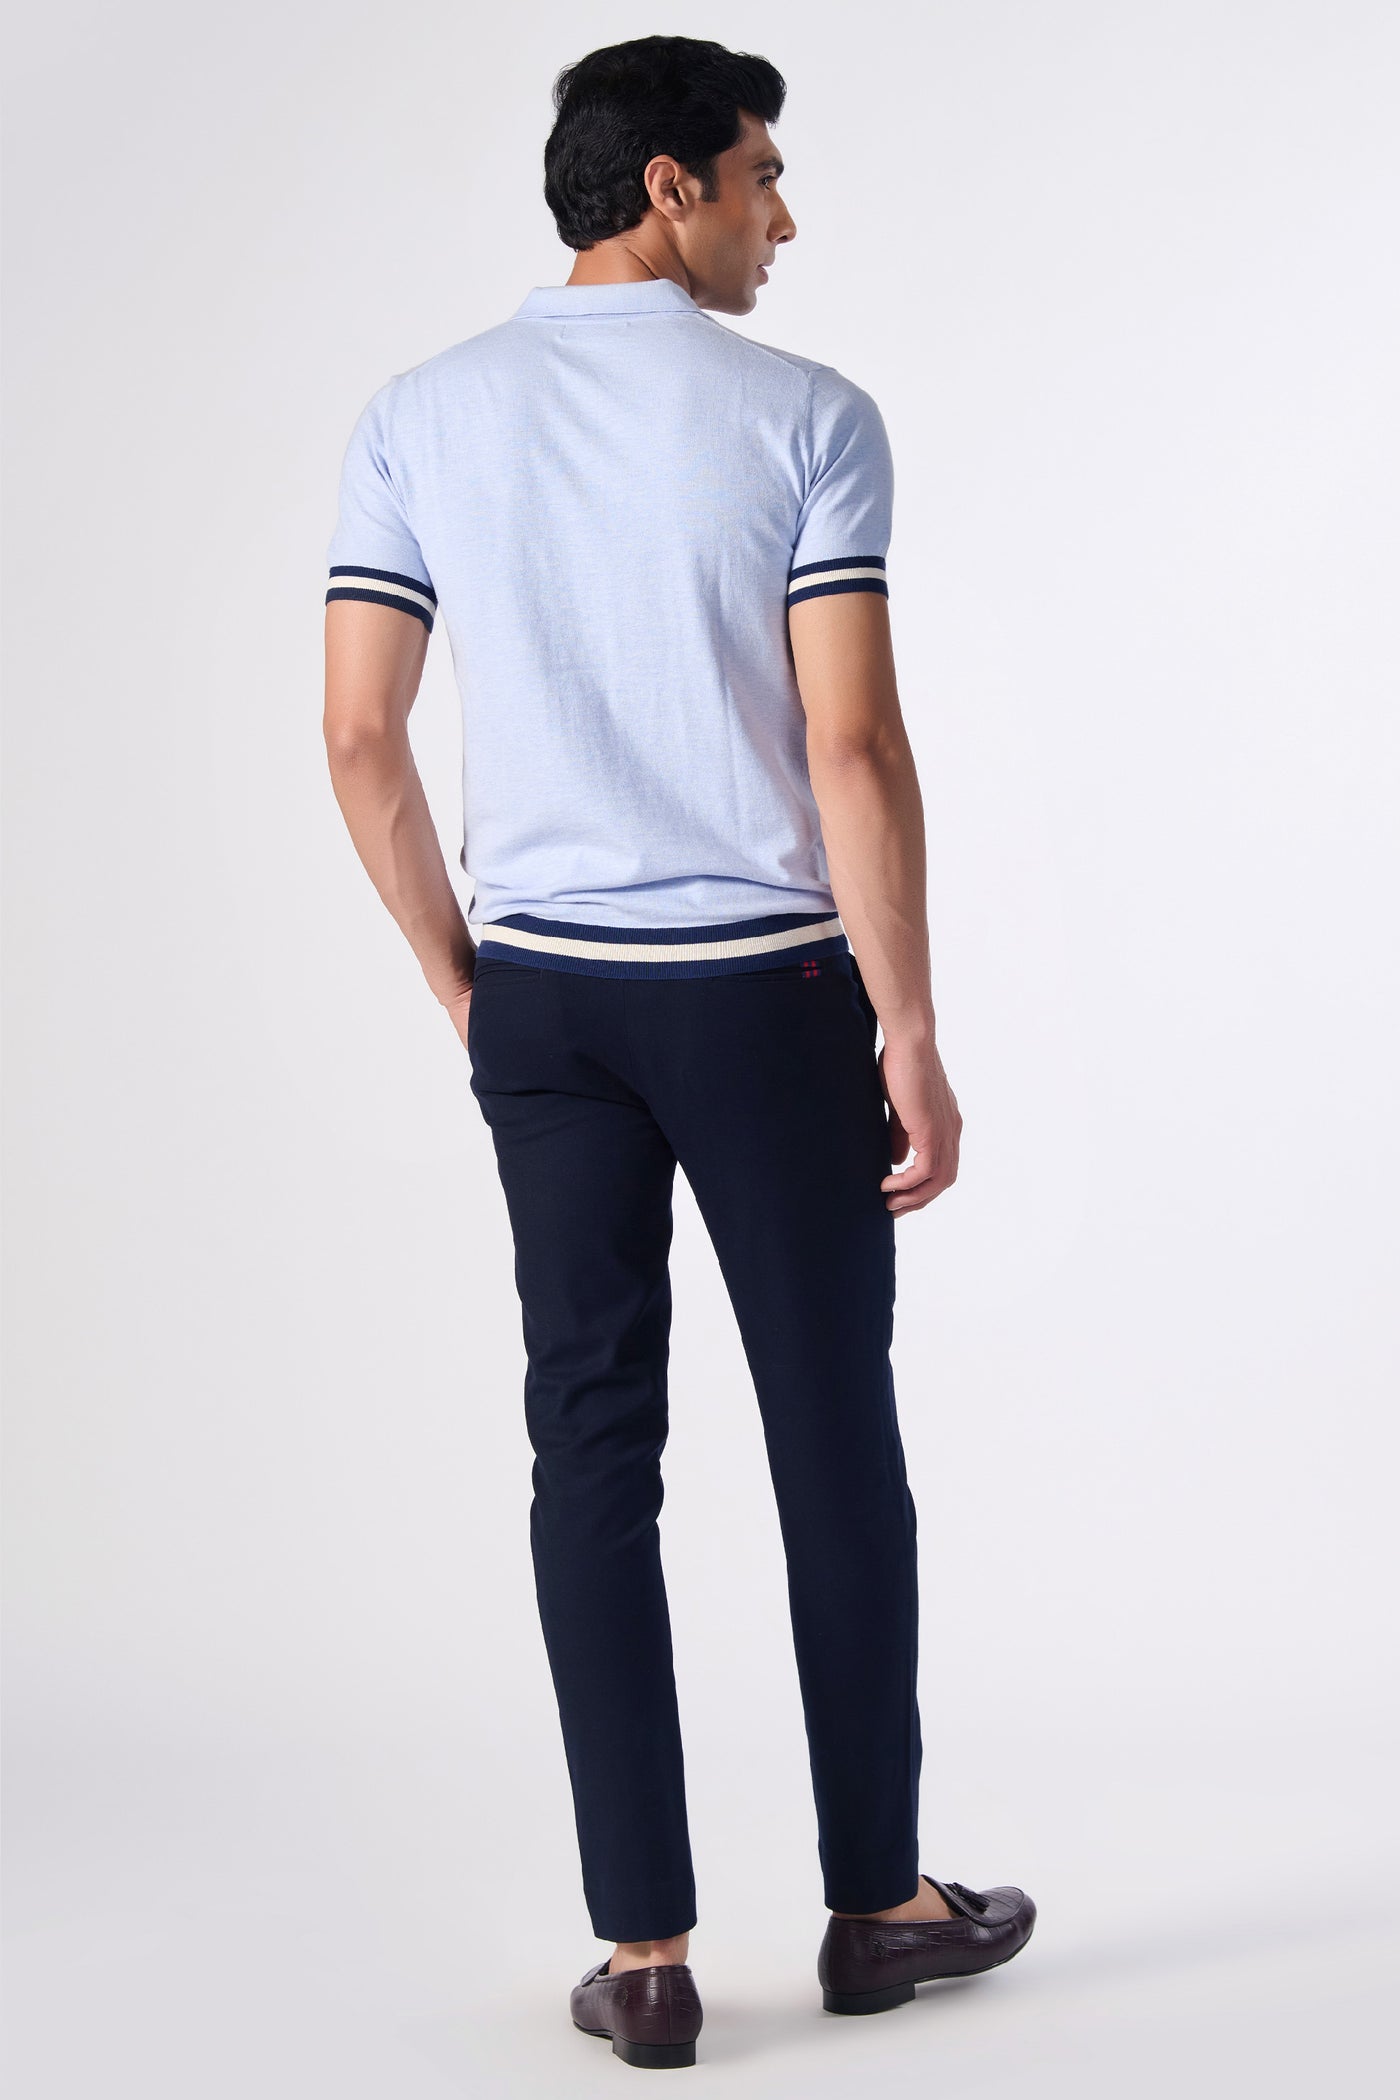 Shantanu & Nikhil Menswear SNCC Light Blue Knit T-shirt indian designer wear online shopping melange singapore